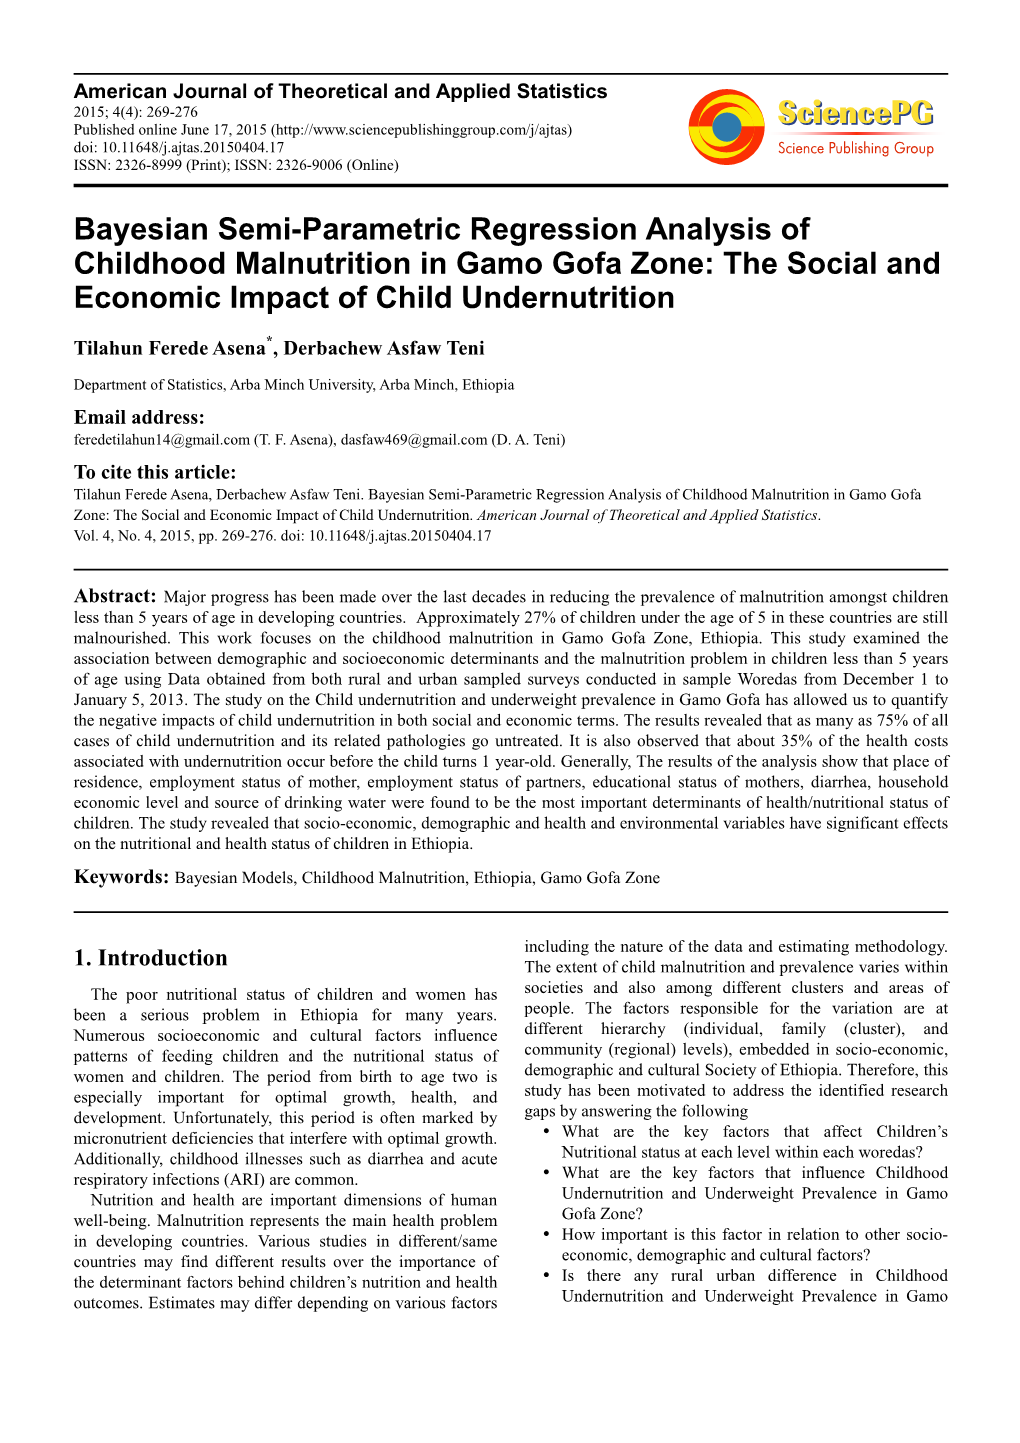 Bayesian Semi-Parametric Regression Analysis of Childhood Malnutrition in Gamo Gofa Zone: the Social and Economic Impact of Child Undernutrition